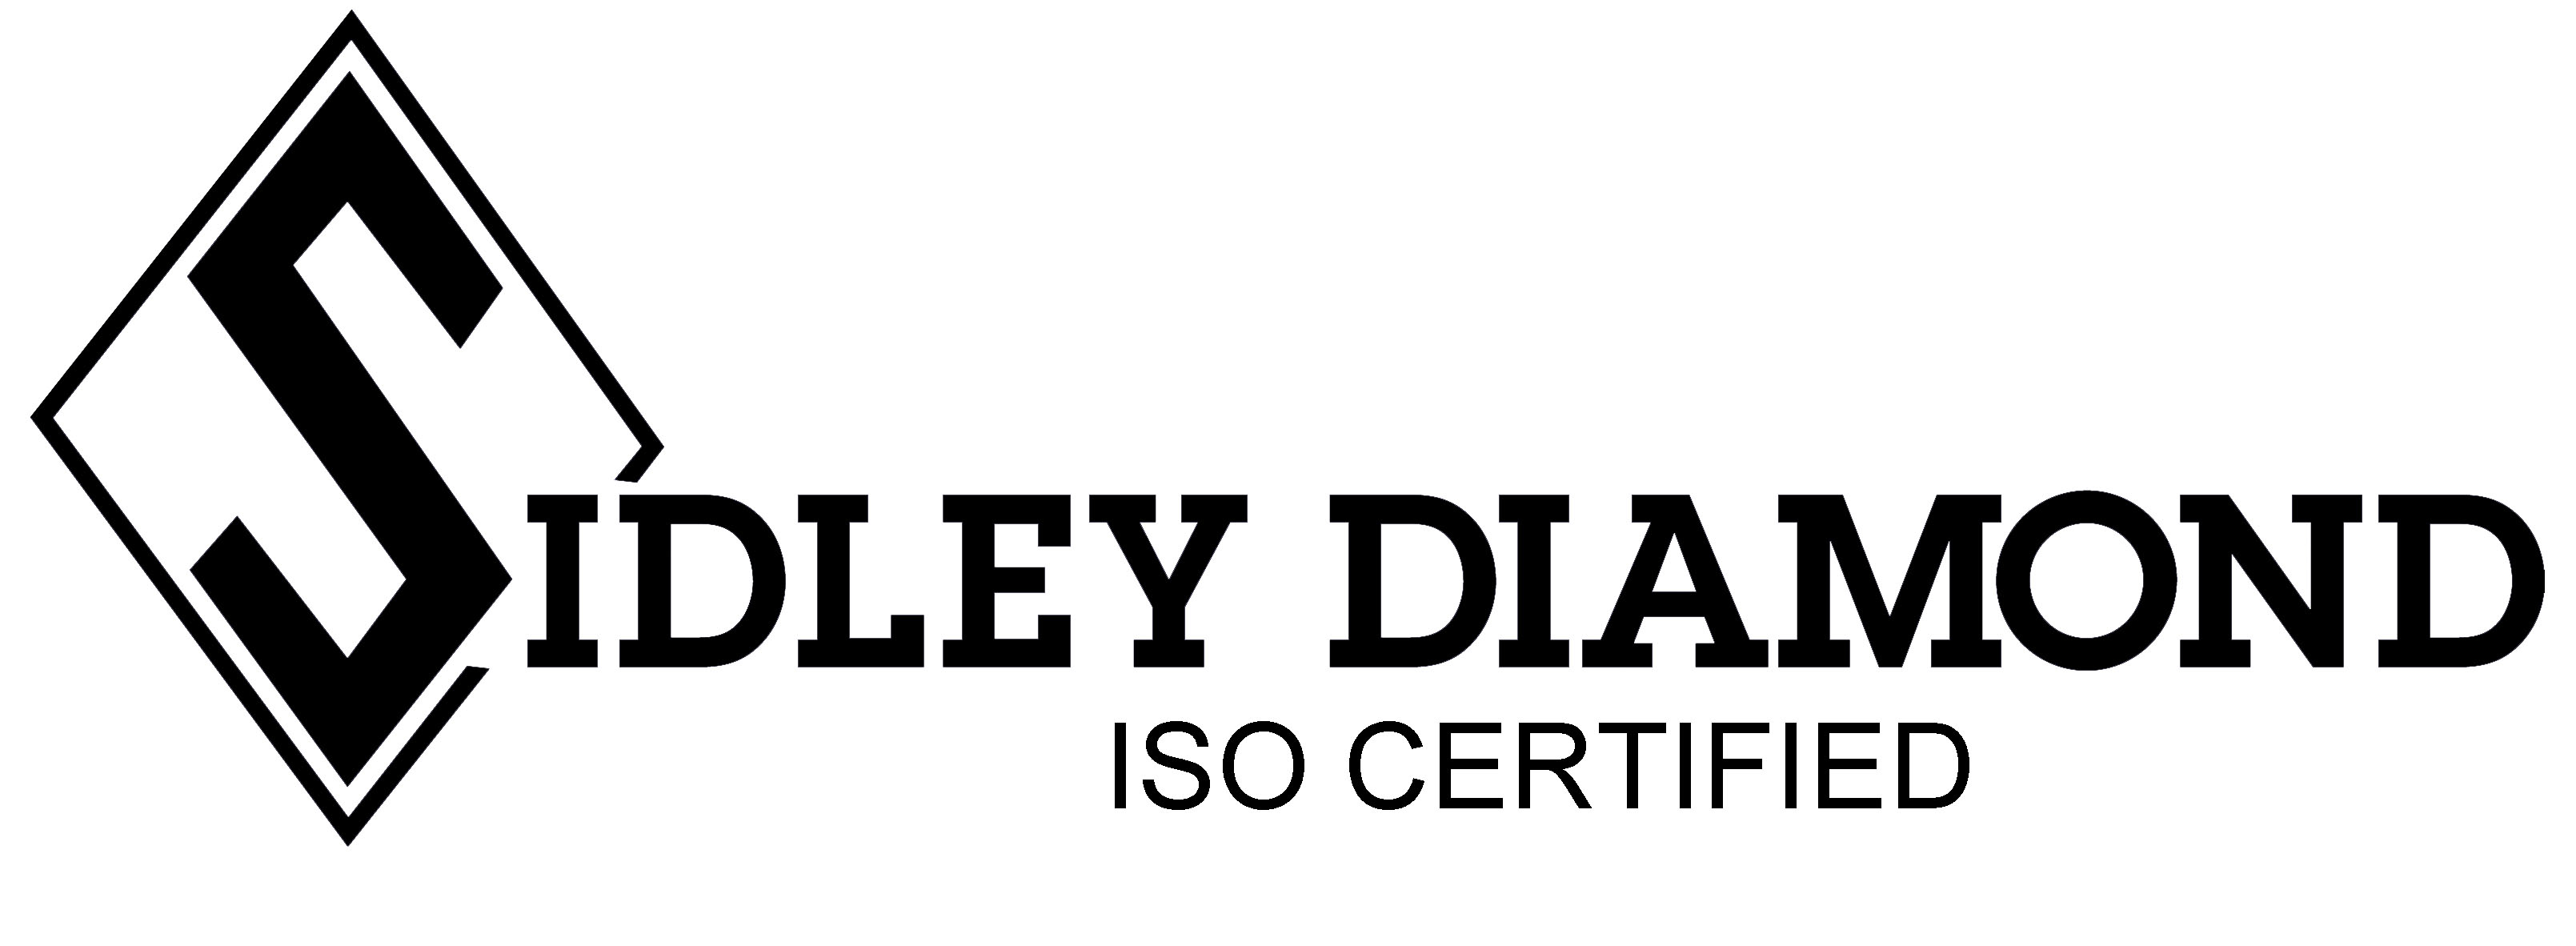 Sidley Diamond Tool Company